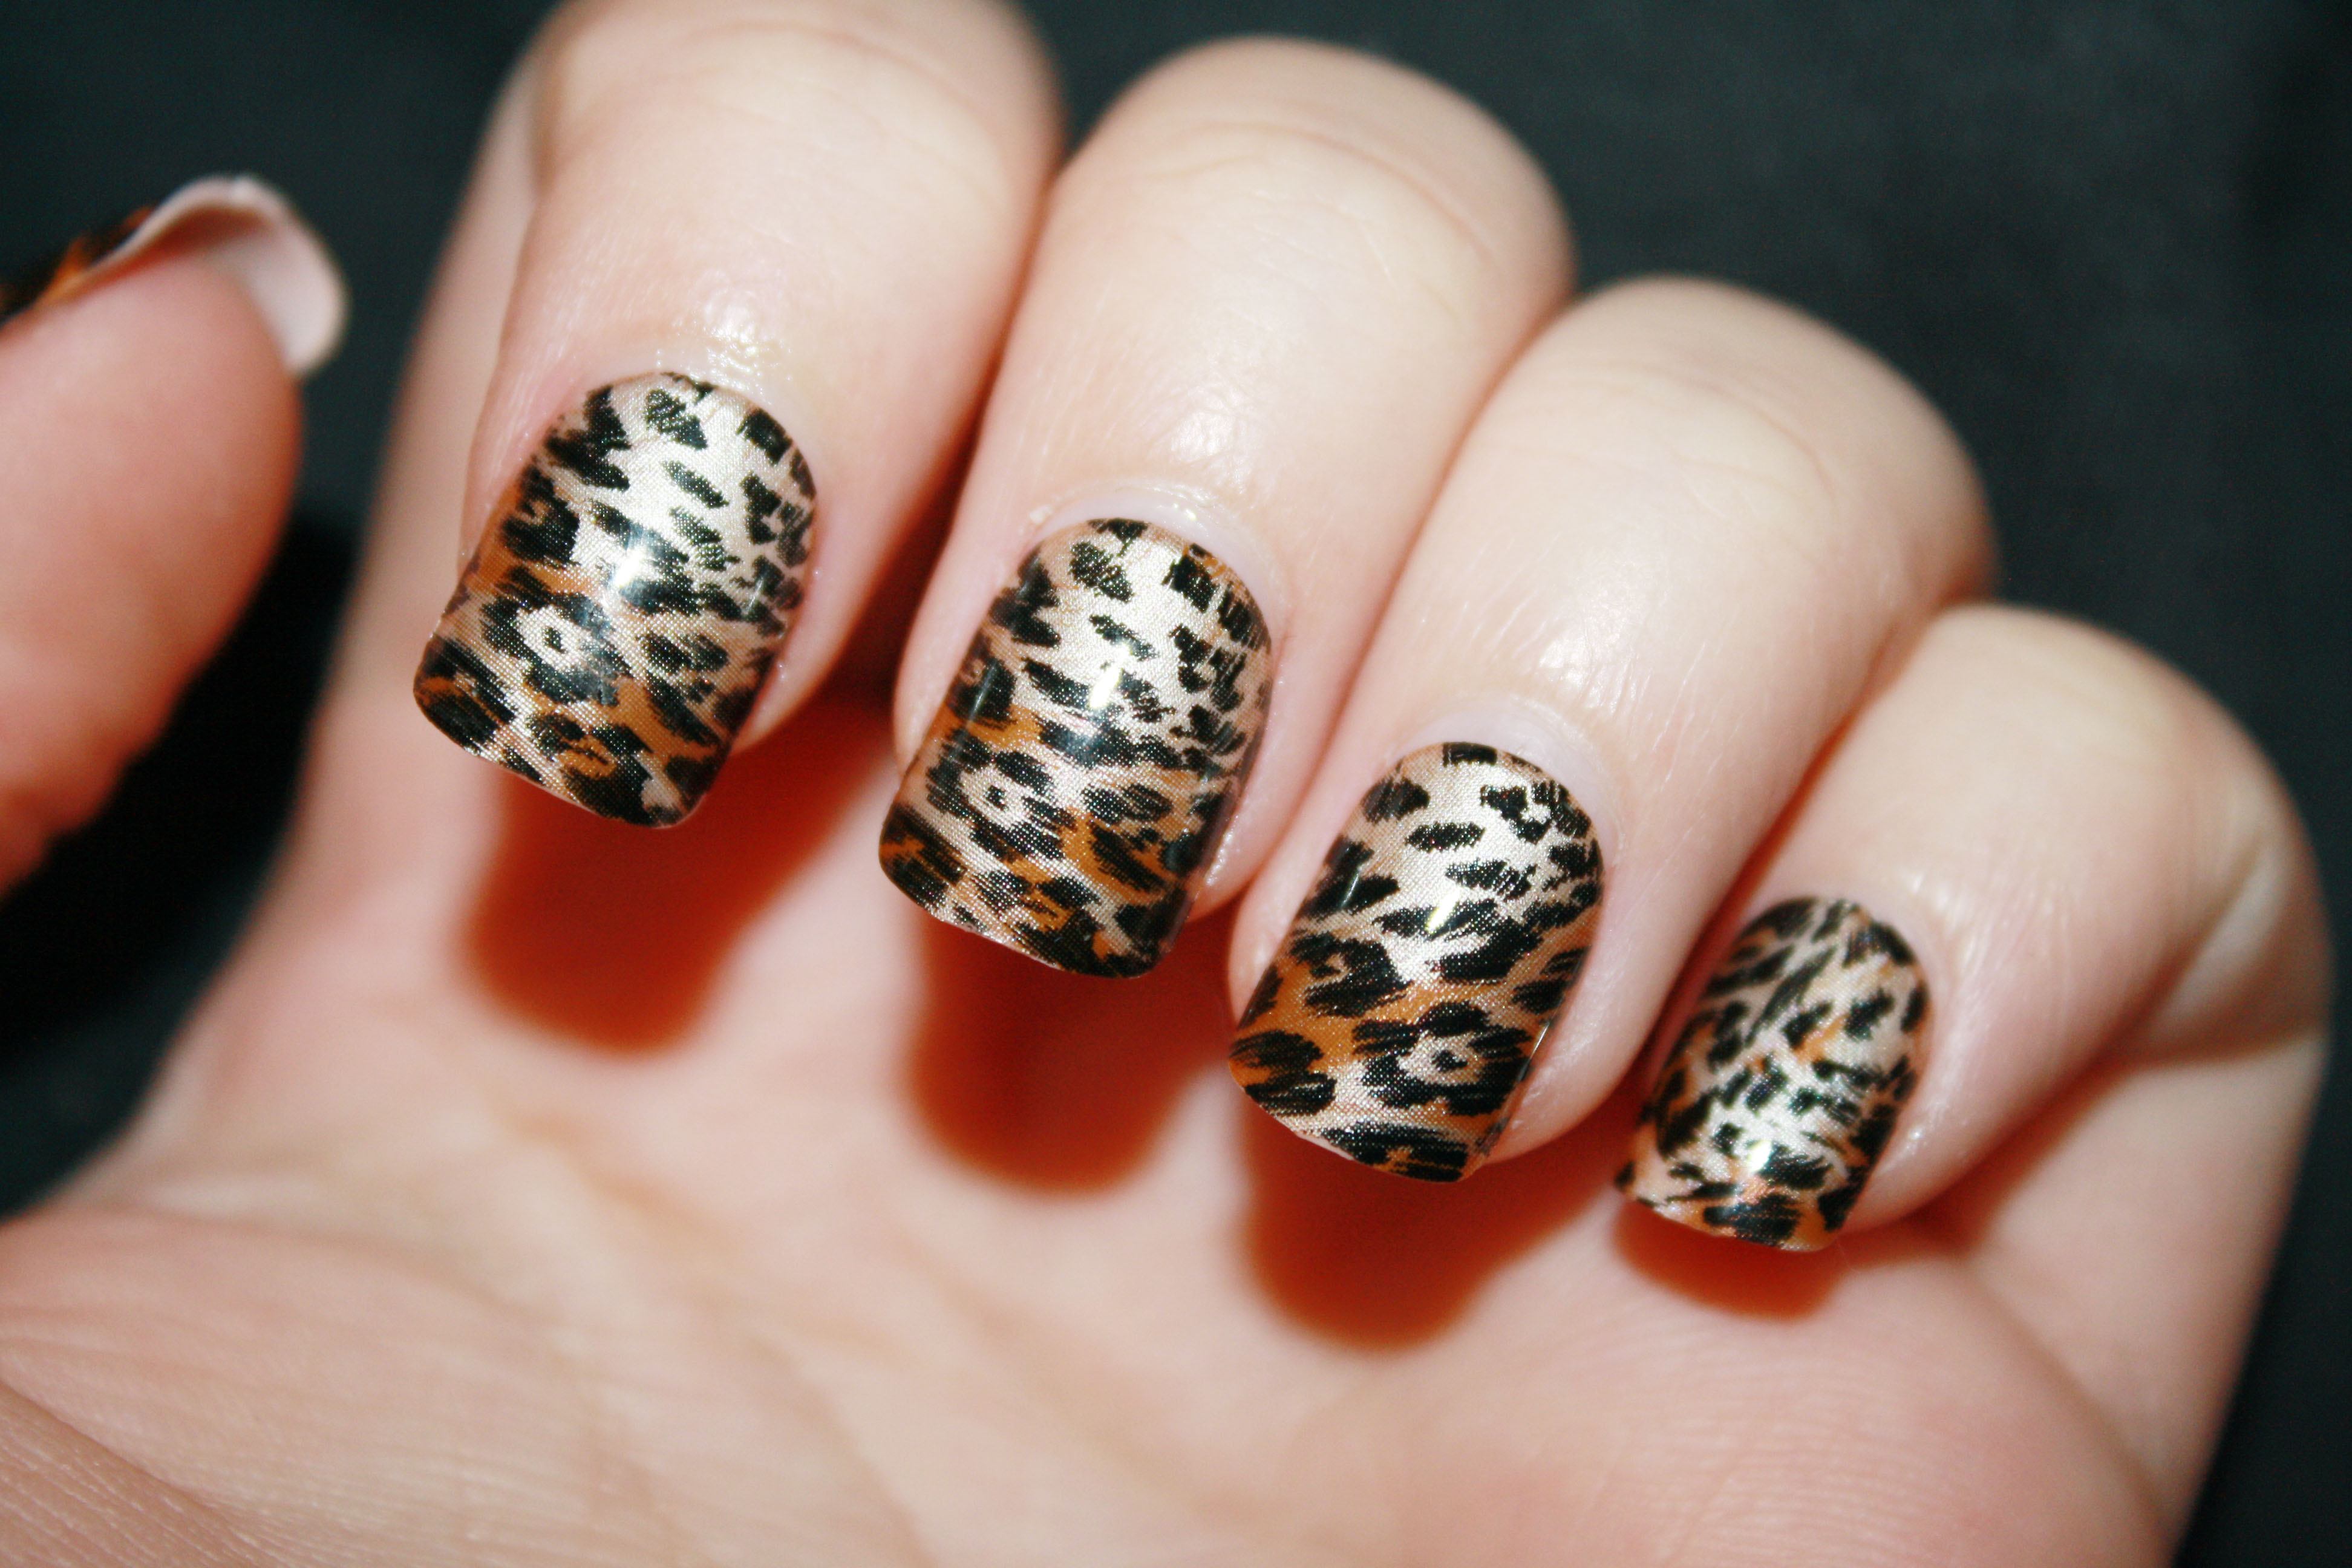 4. Cheetah Print Nail Designs for Long Nails on Pinterest - wide 6